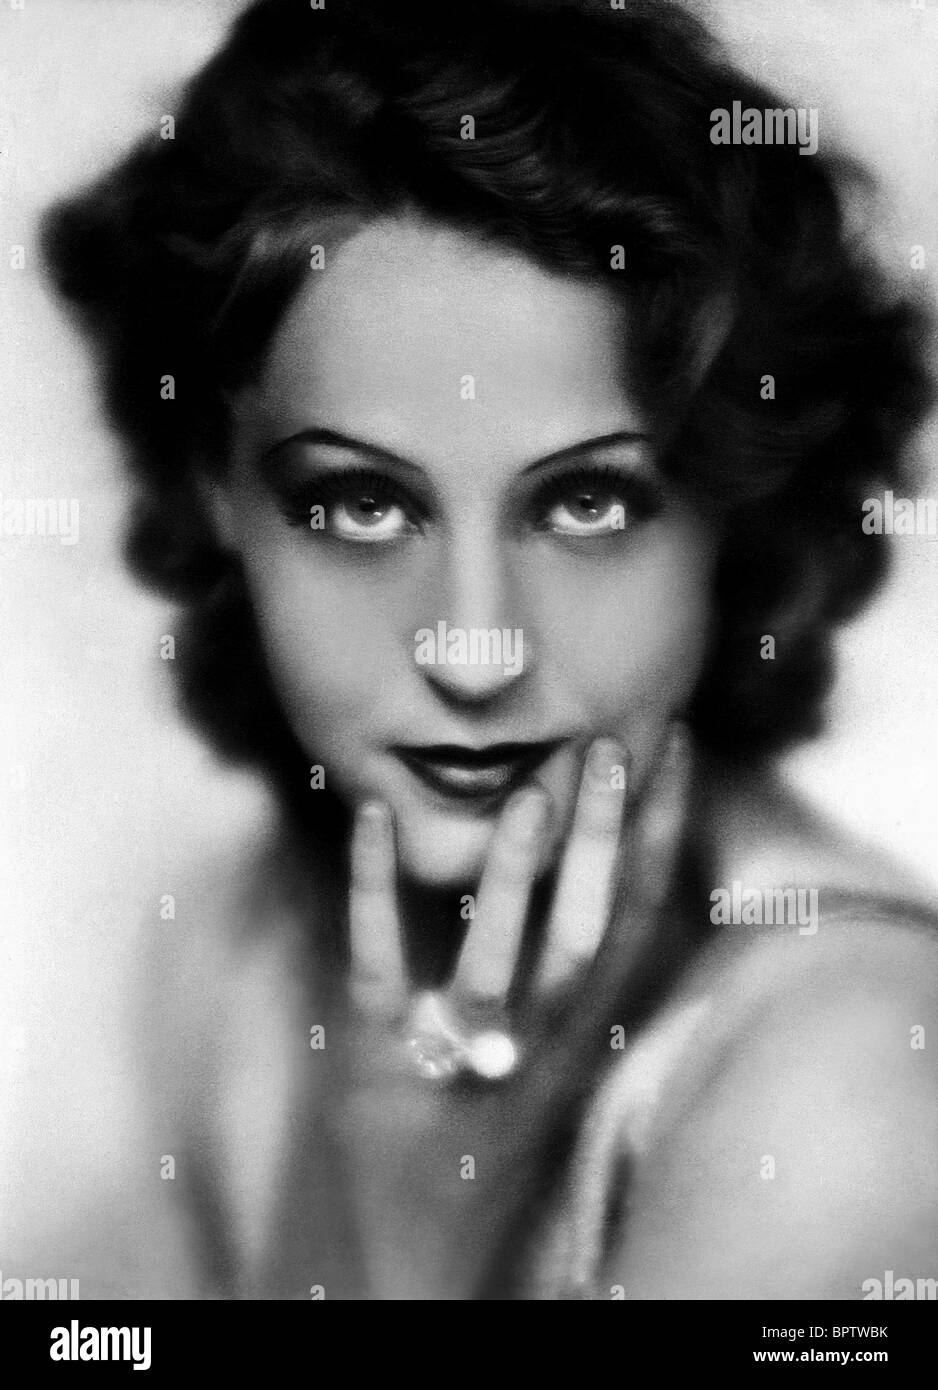 BRIGITTE HELM ACTRESS (1933) Stock Photo